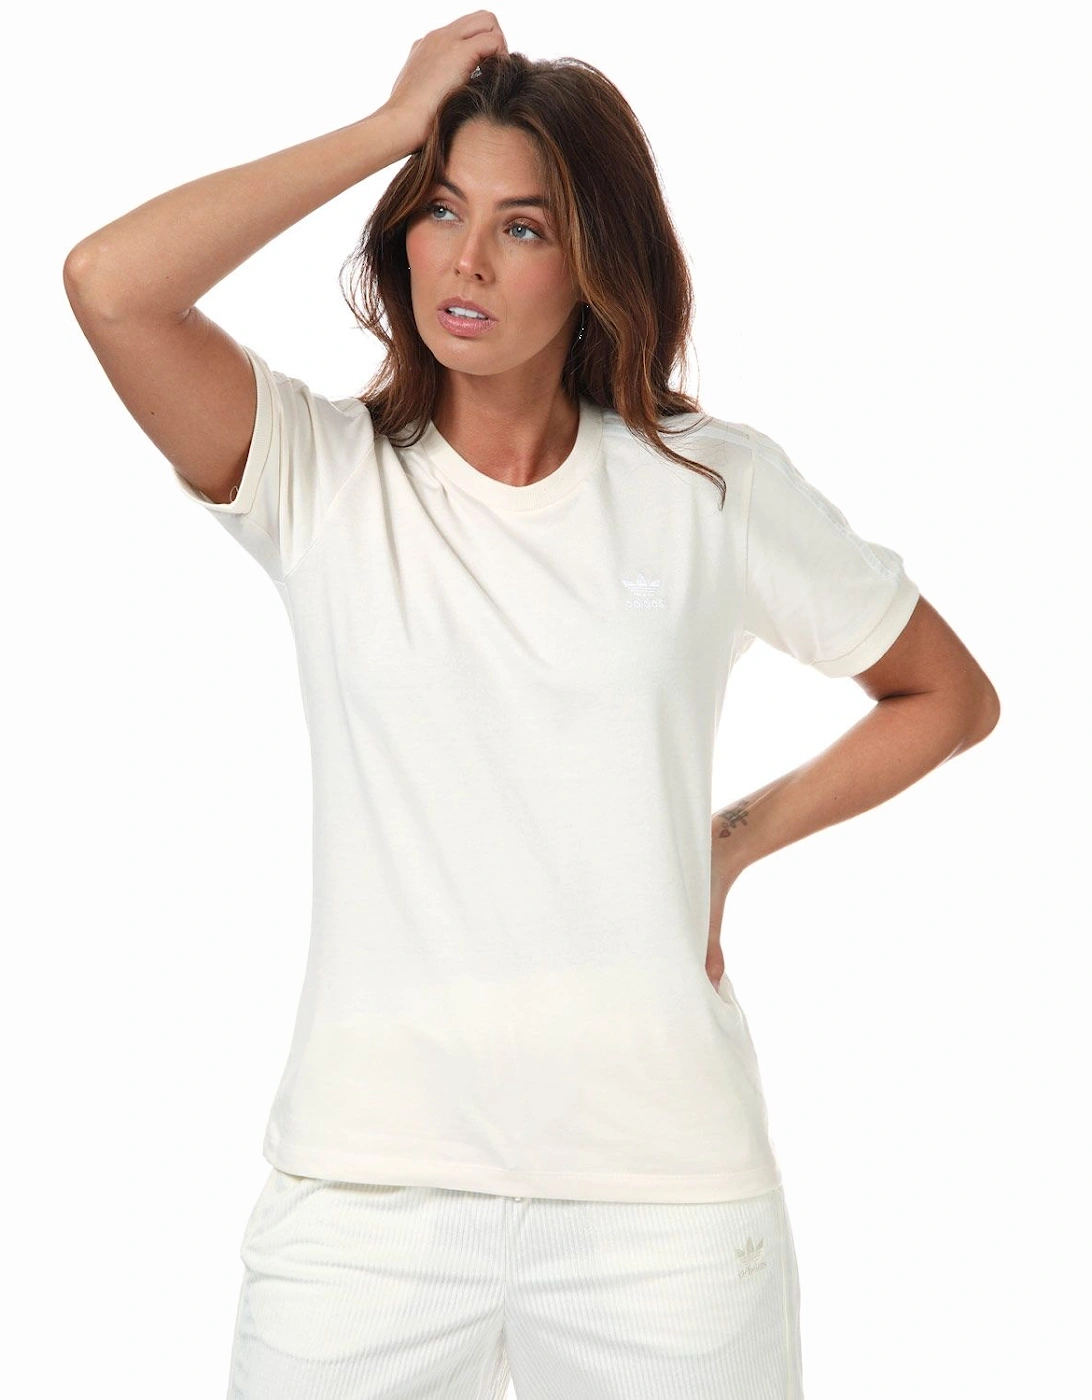 Womens Adicolor Classics 3-Stripes T-Shirt